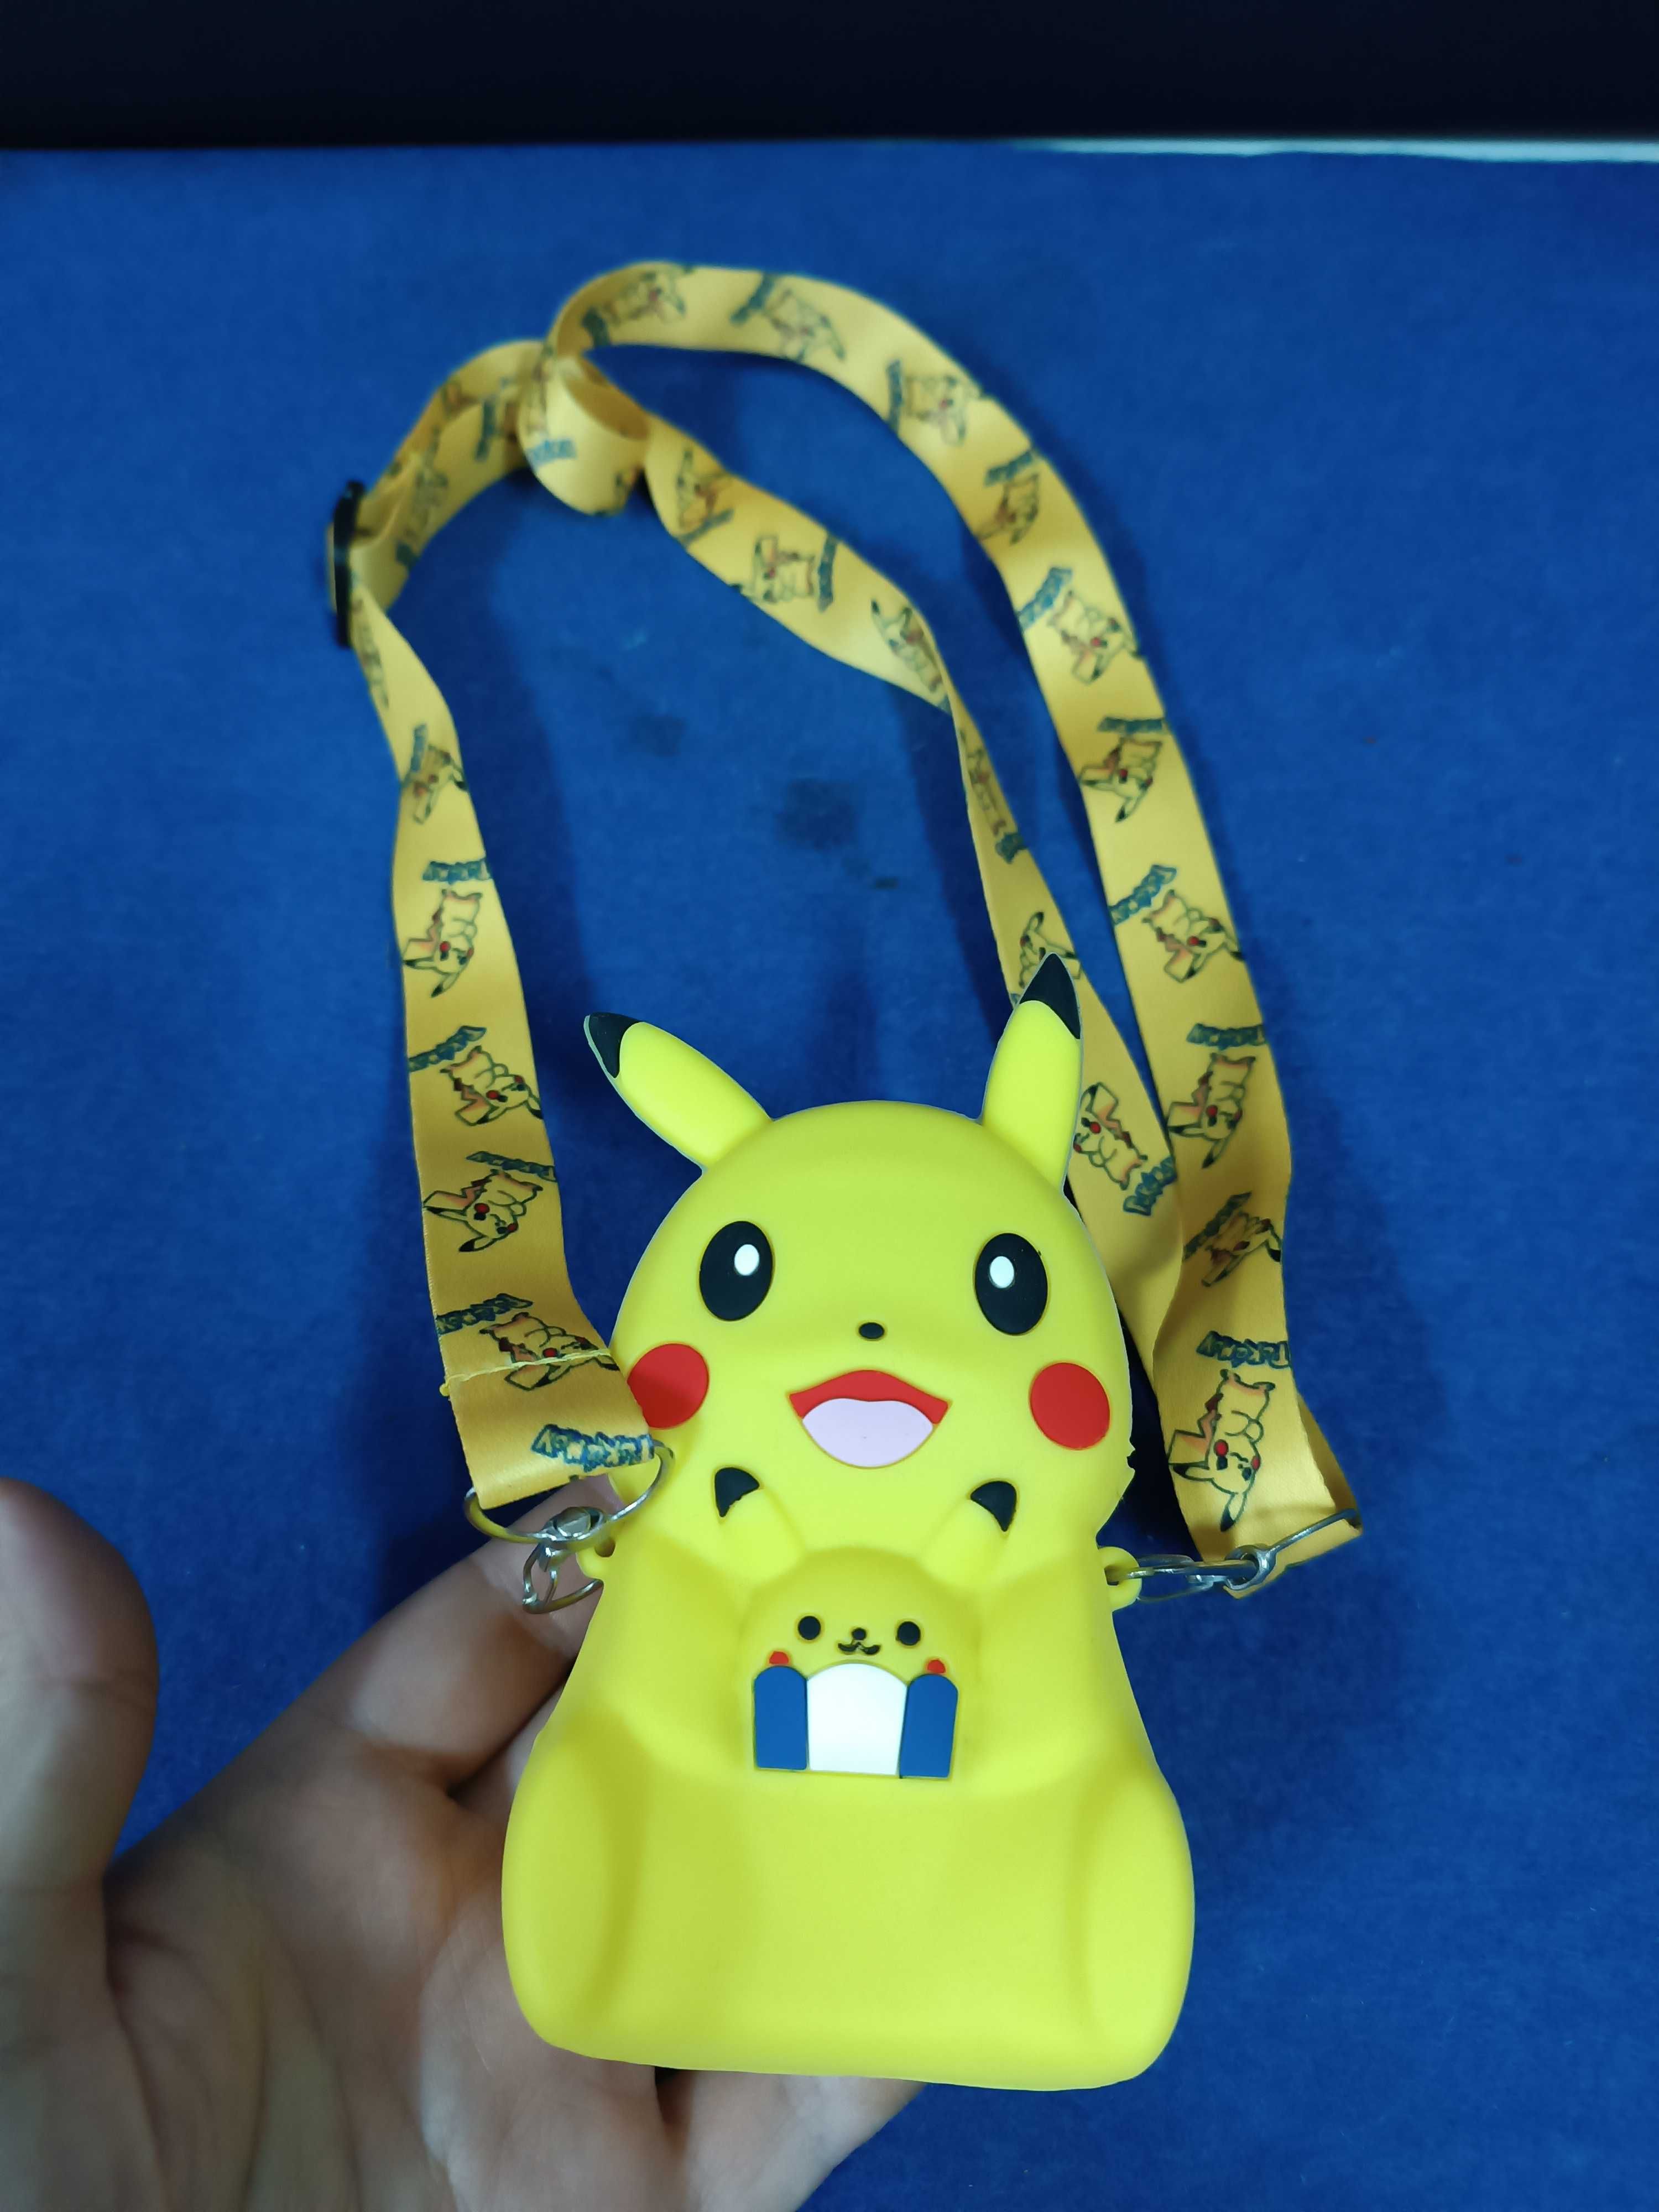 Curioso porta moedas Pokemon pikachu da marca Snake Dada